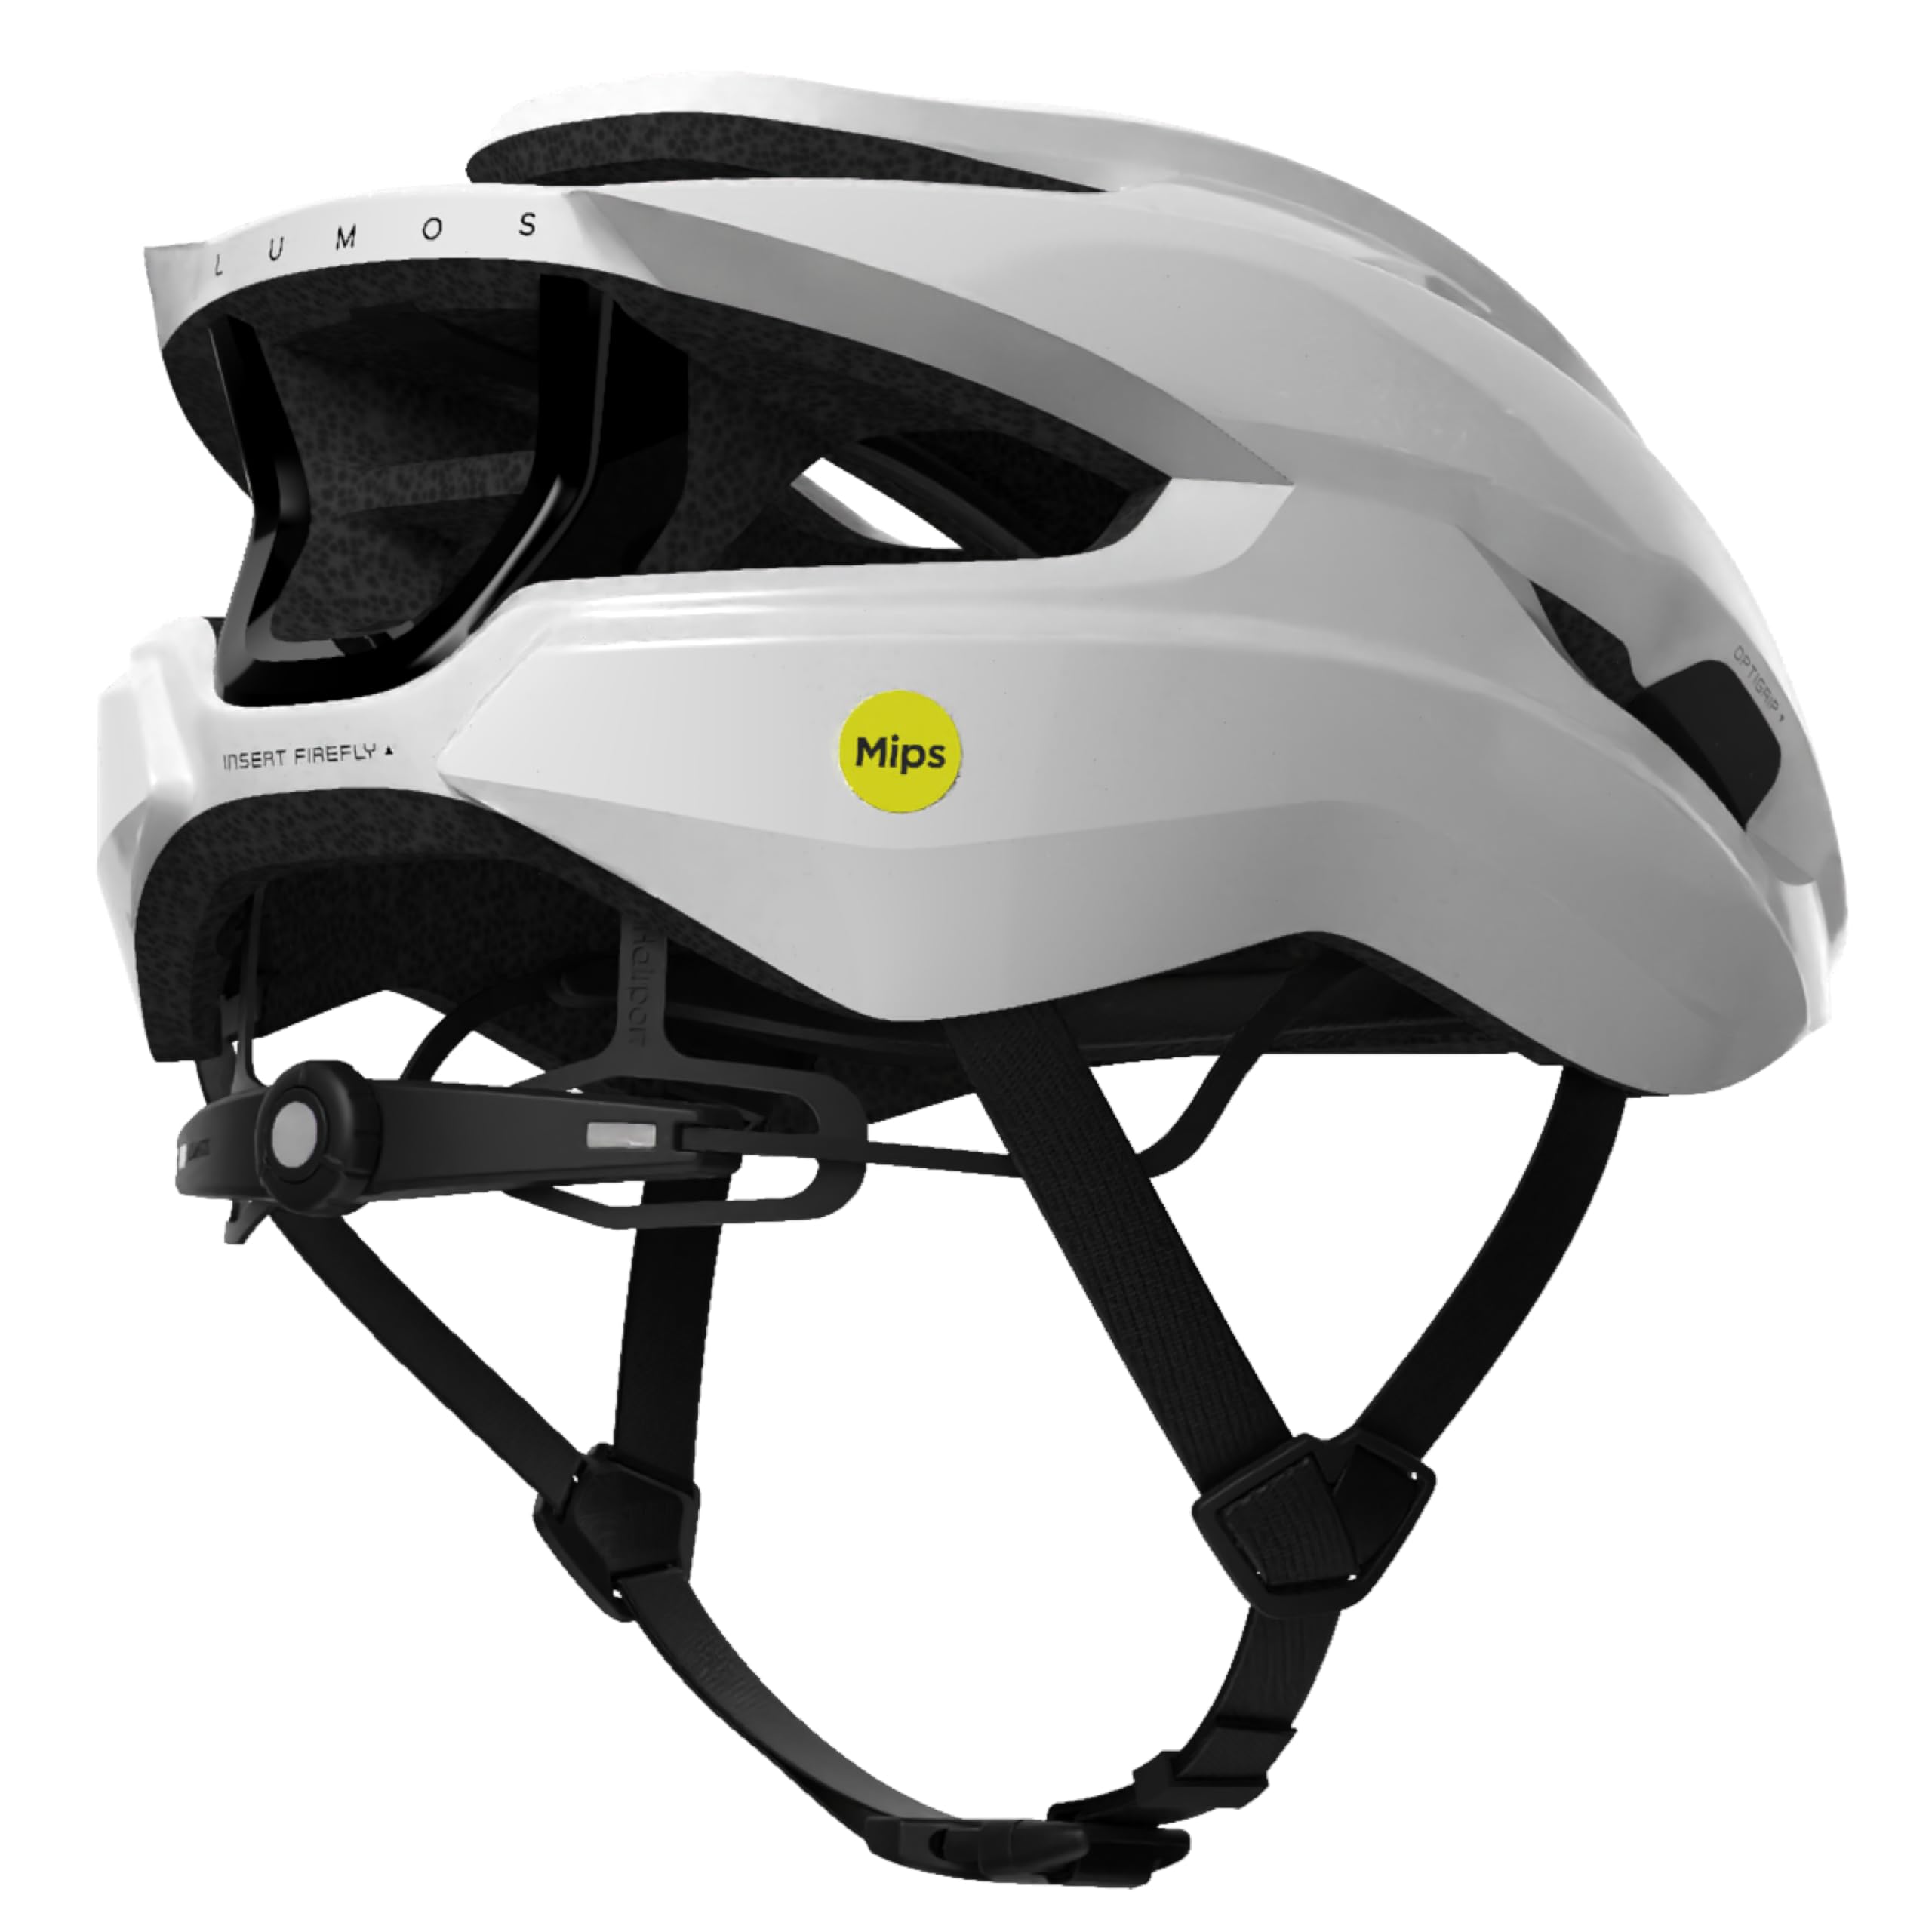 Lumos Ultra Fly - Lightweight Bike Helmet Lumos Firefly Compatible Rear Light Built-in Sunglasses Port Custom-Made Fi